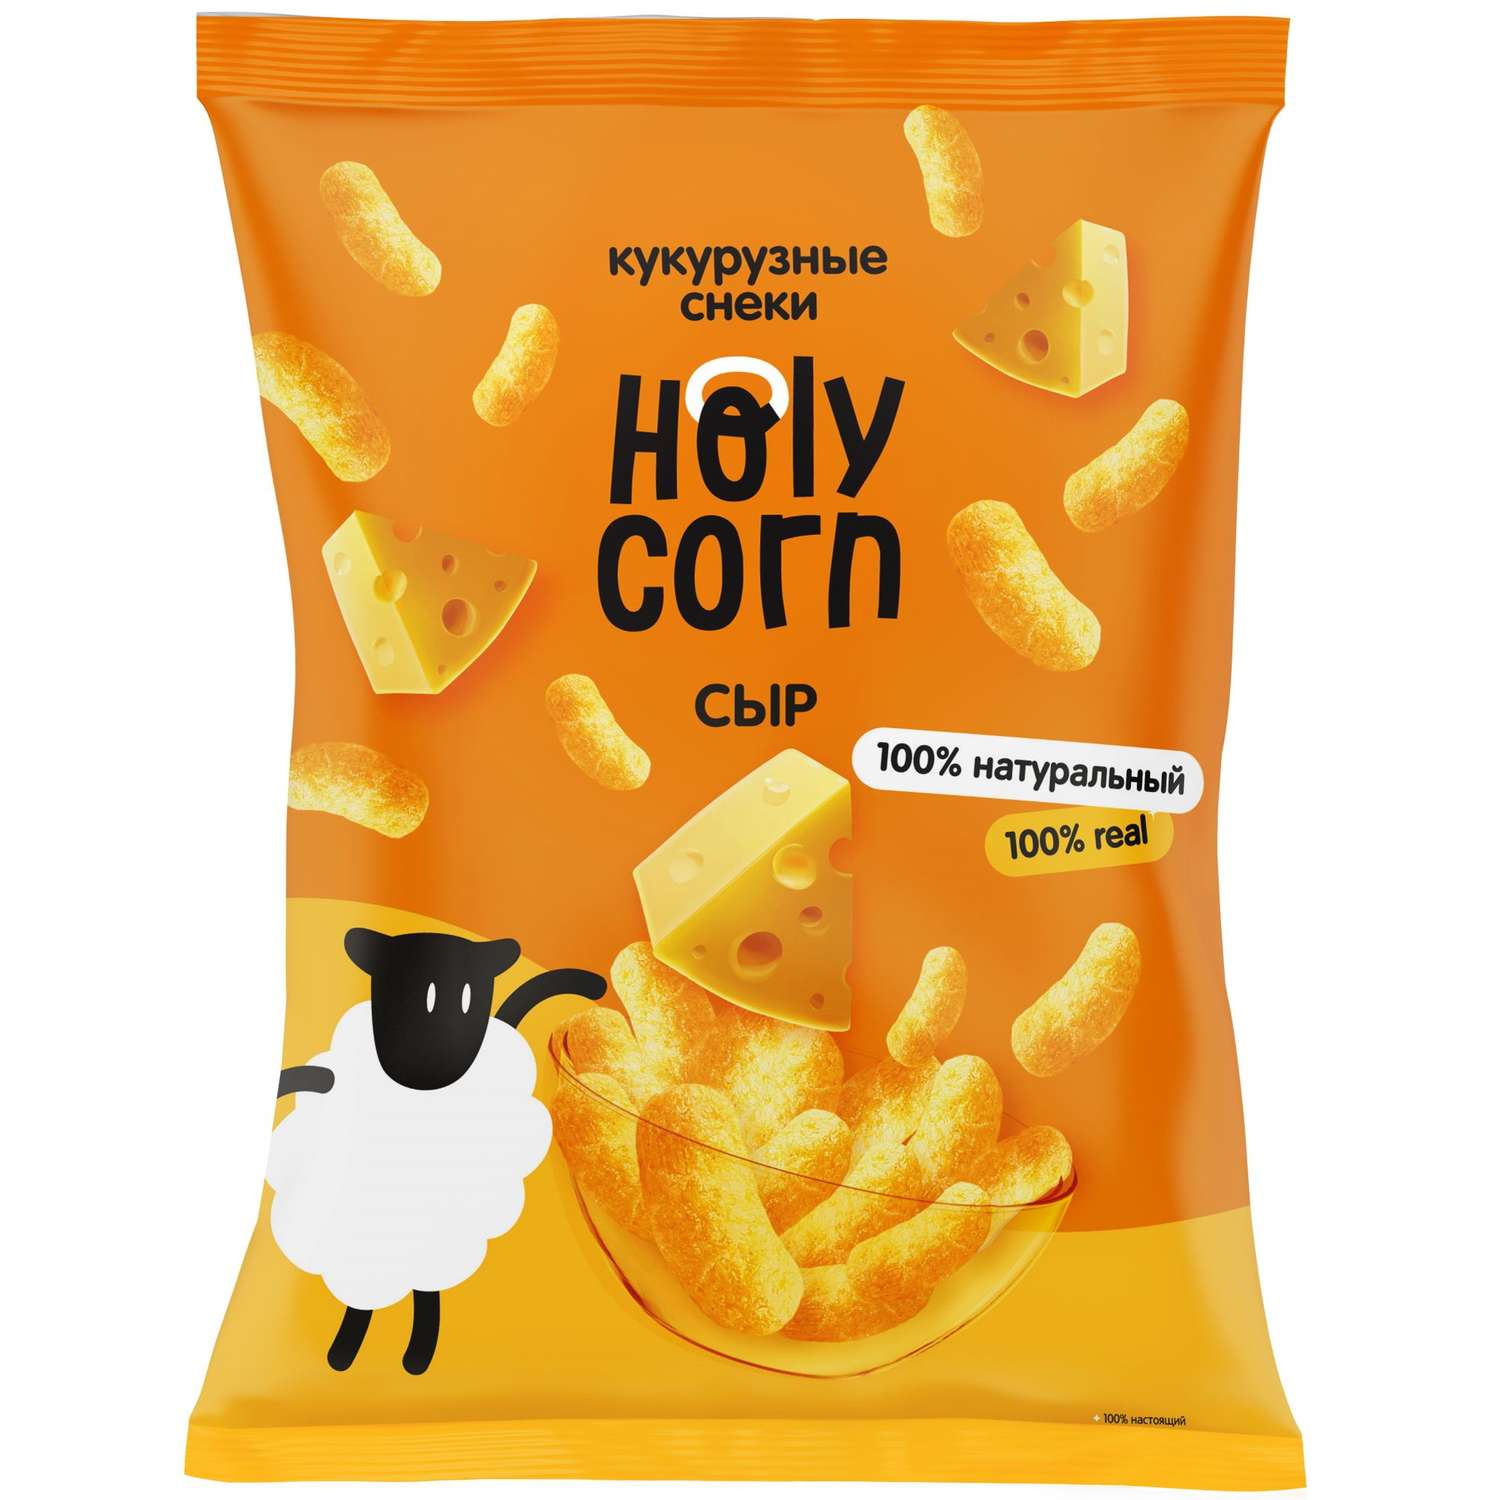 Снеки кукурузные Holy Corn сыр 50г - фото 1